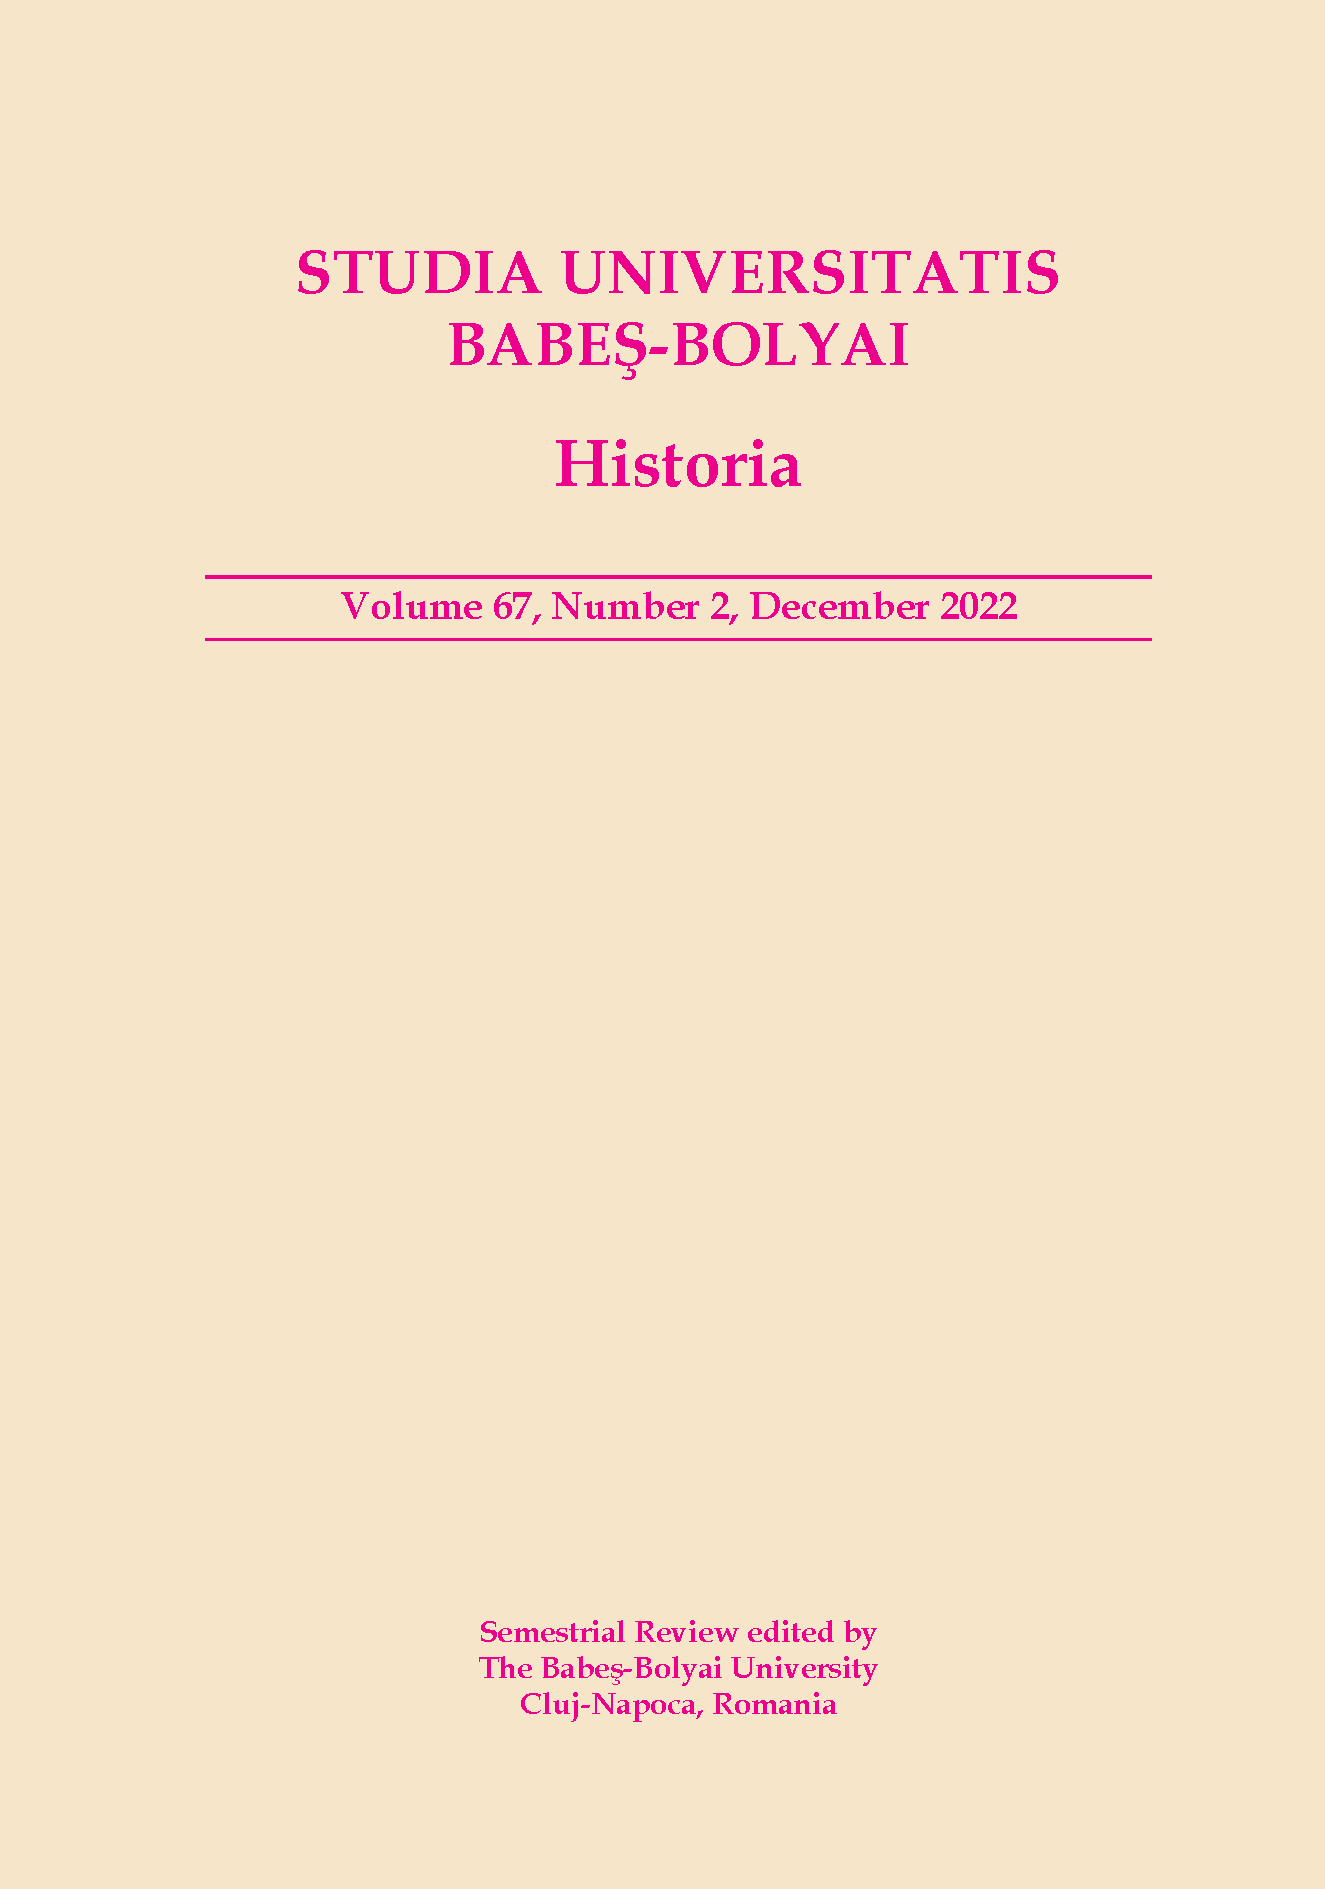 STUDIA UBB HISTORIA, Volume 67 (LXVII), No. 2, December 2022